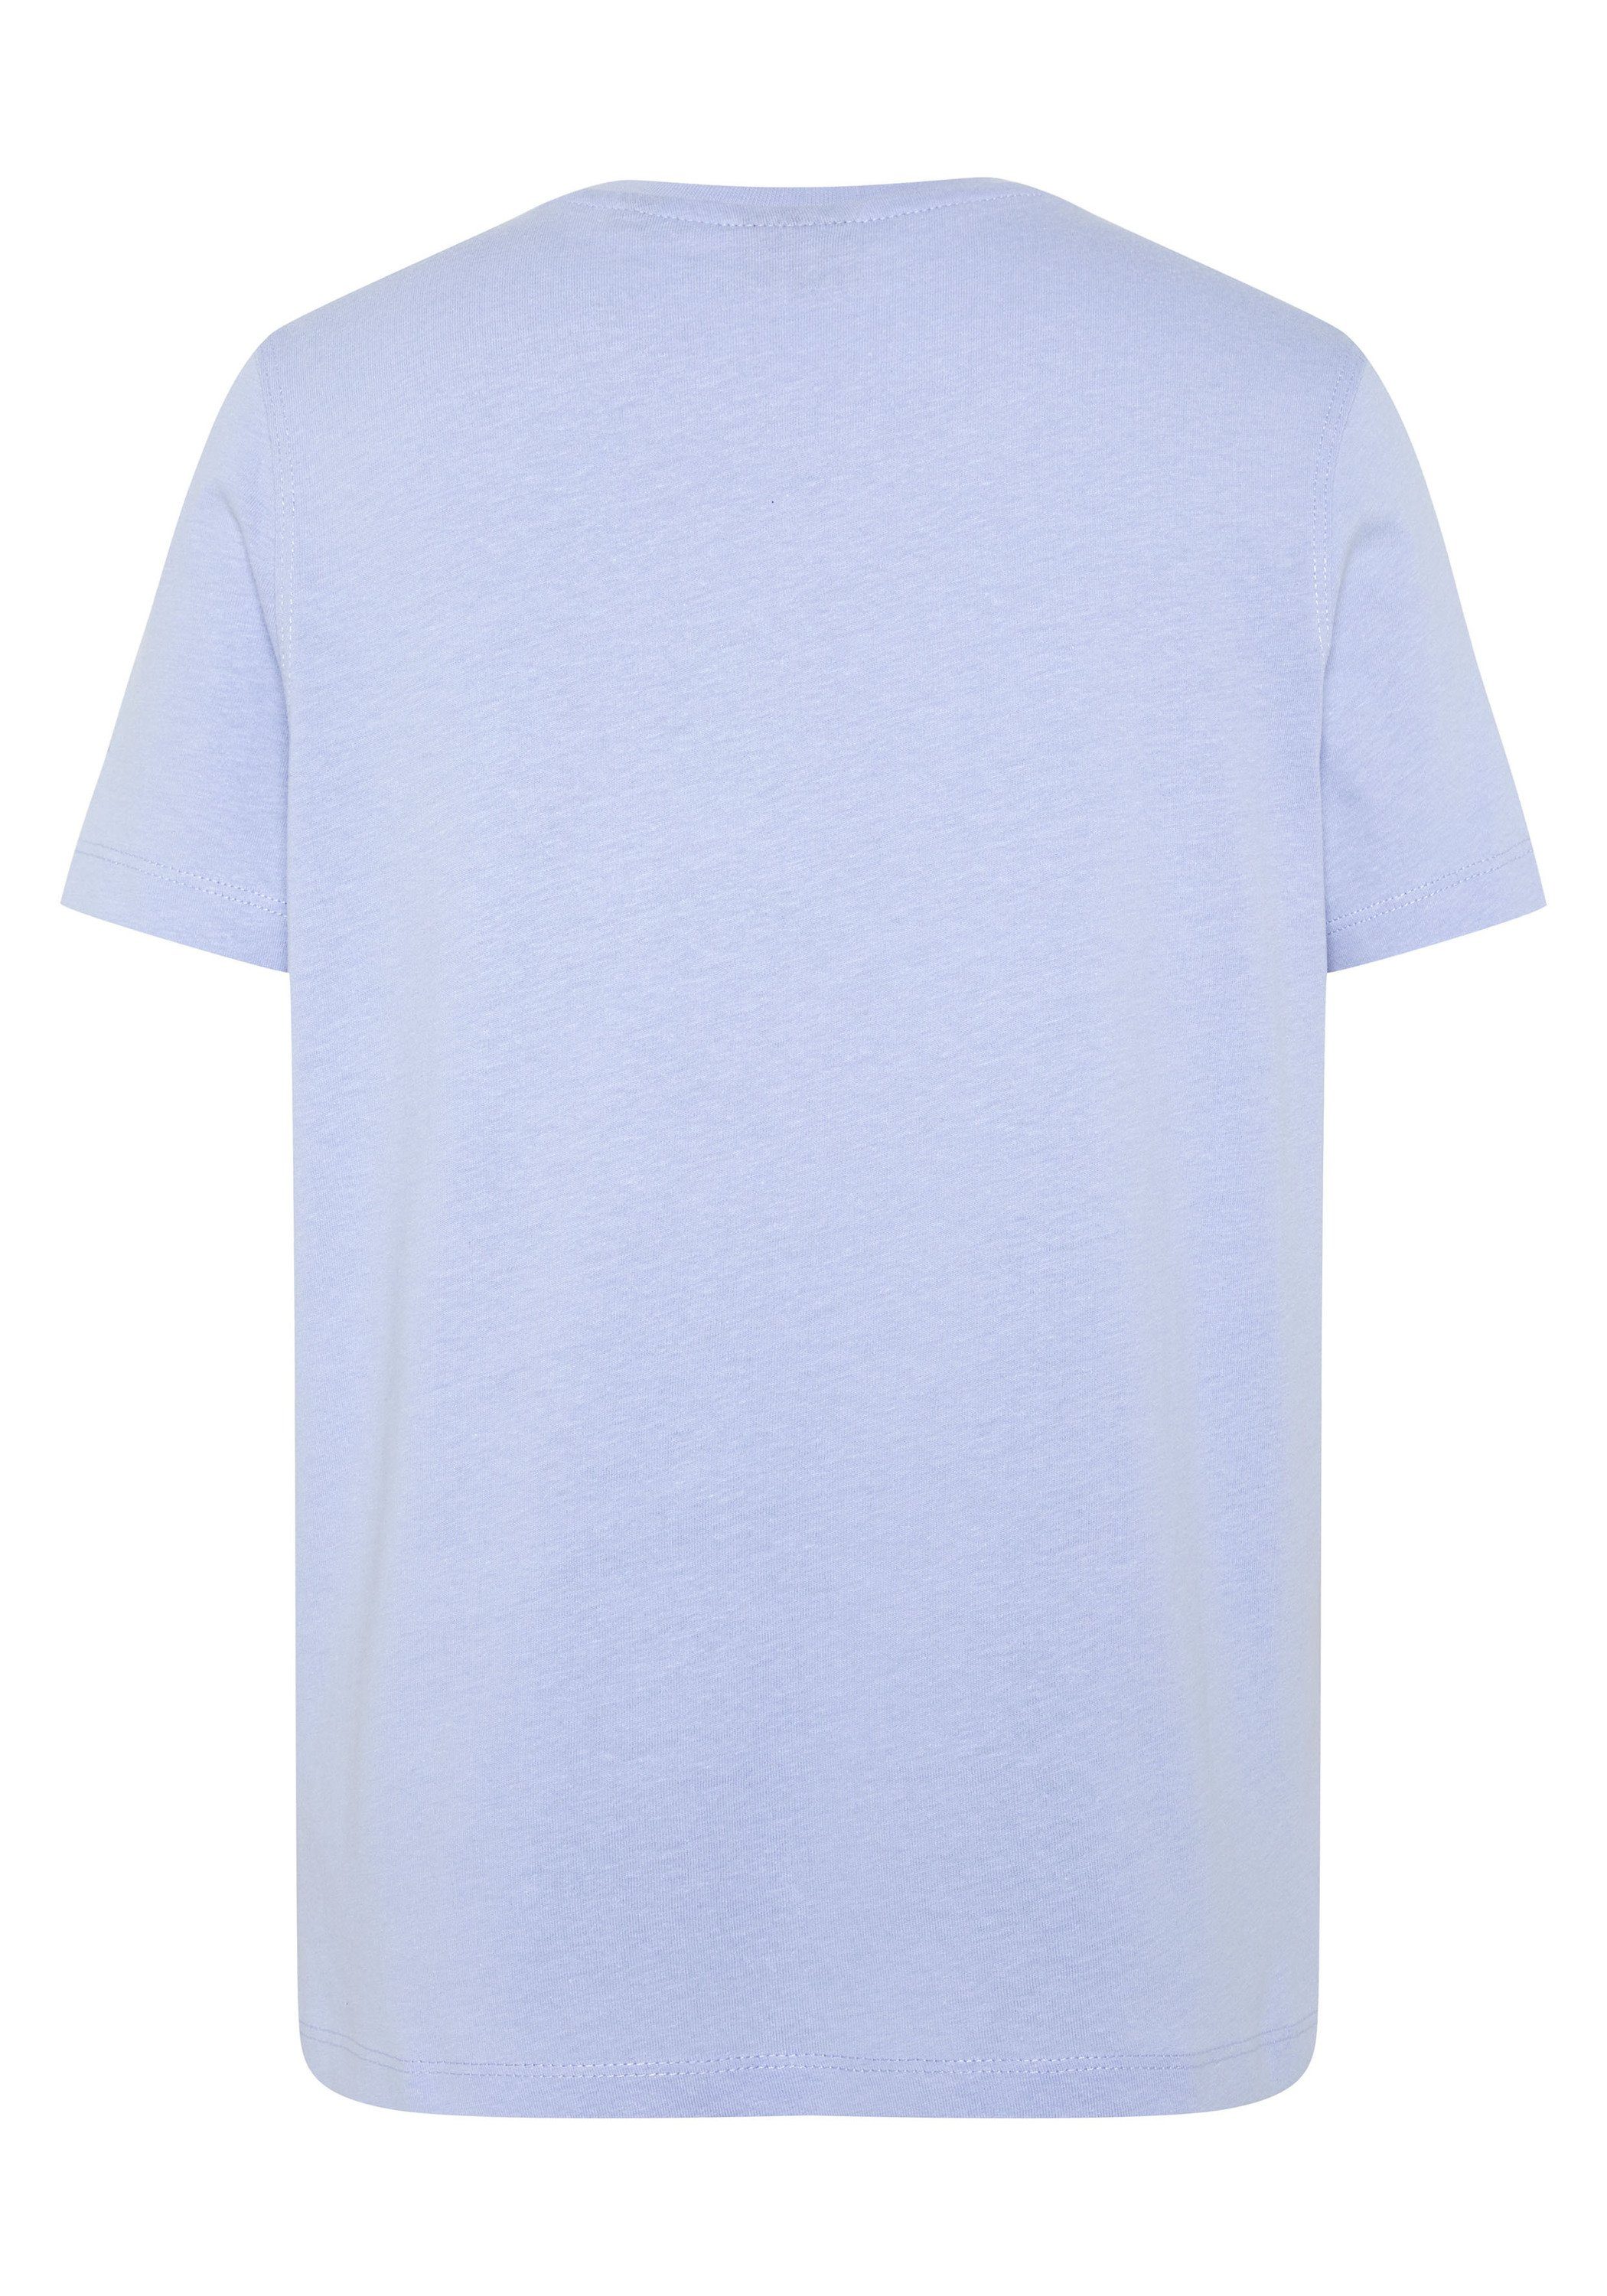 Brunnera 16-3922 reiner aus Baumwolle Print-Shirt Blue Sylt Polo